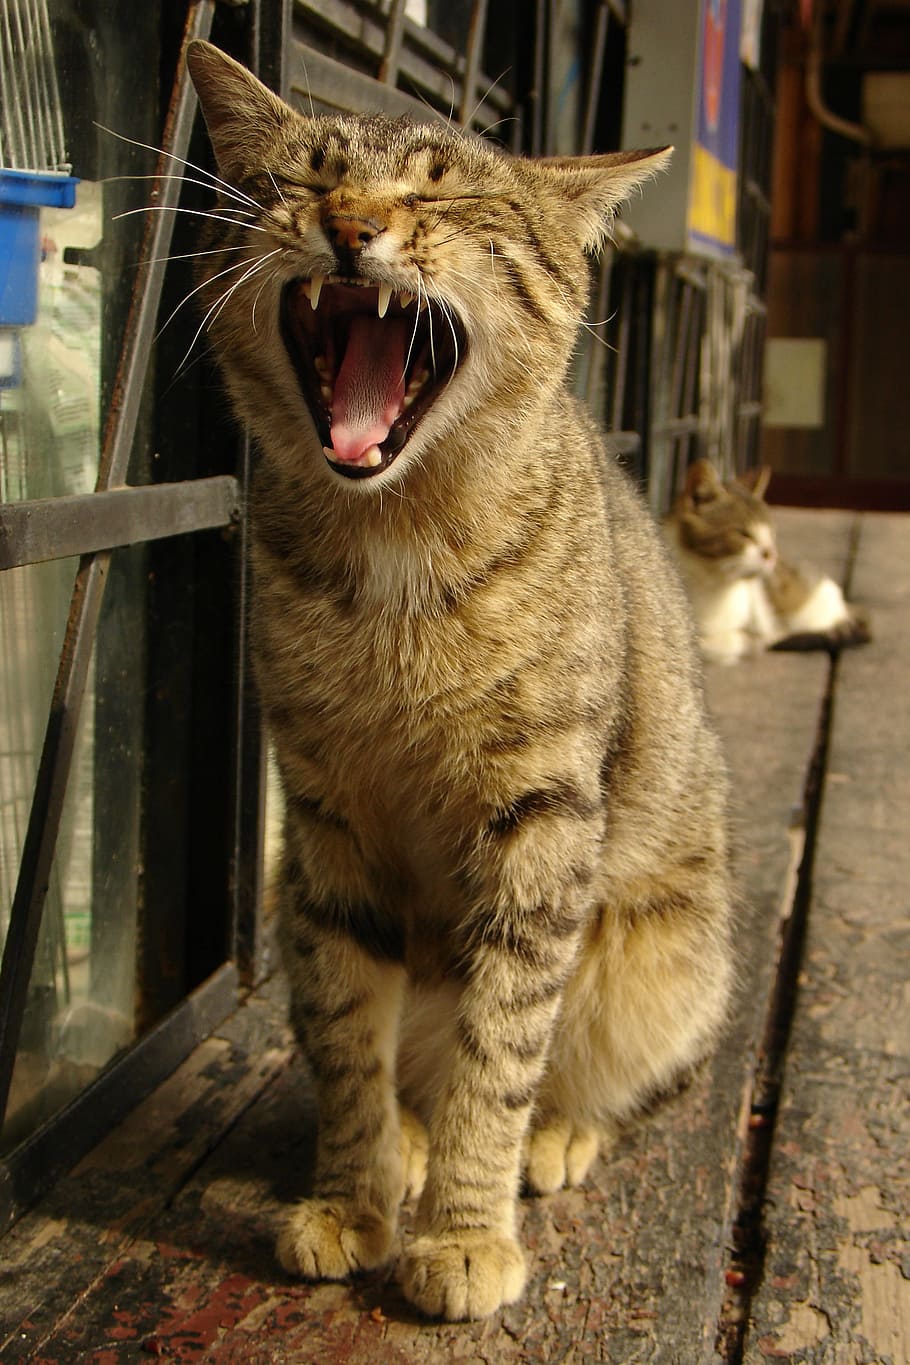 Cat, Yawning, Teeth, Tongue, Portrait, teeth, tongue, yawn, one animal, animal themes, feline